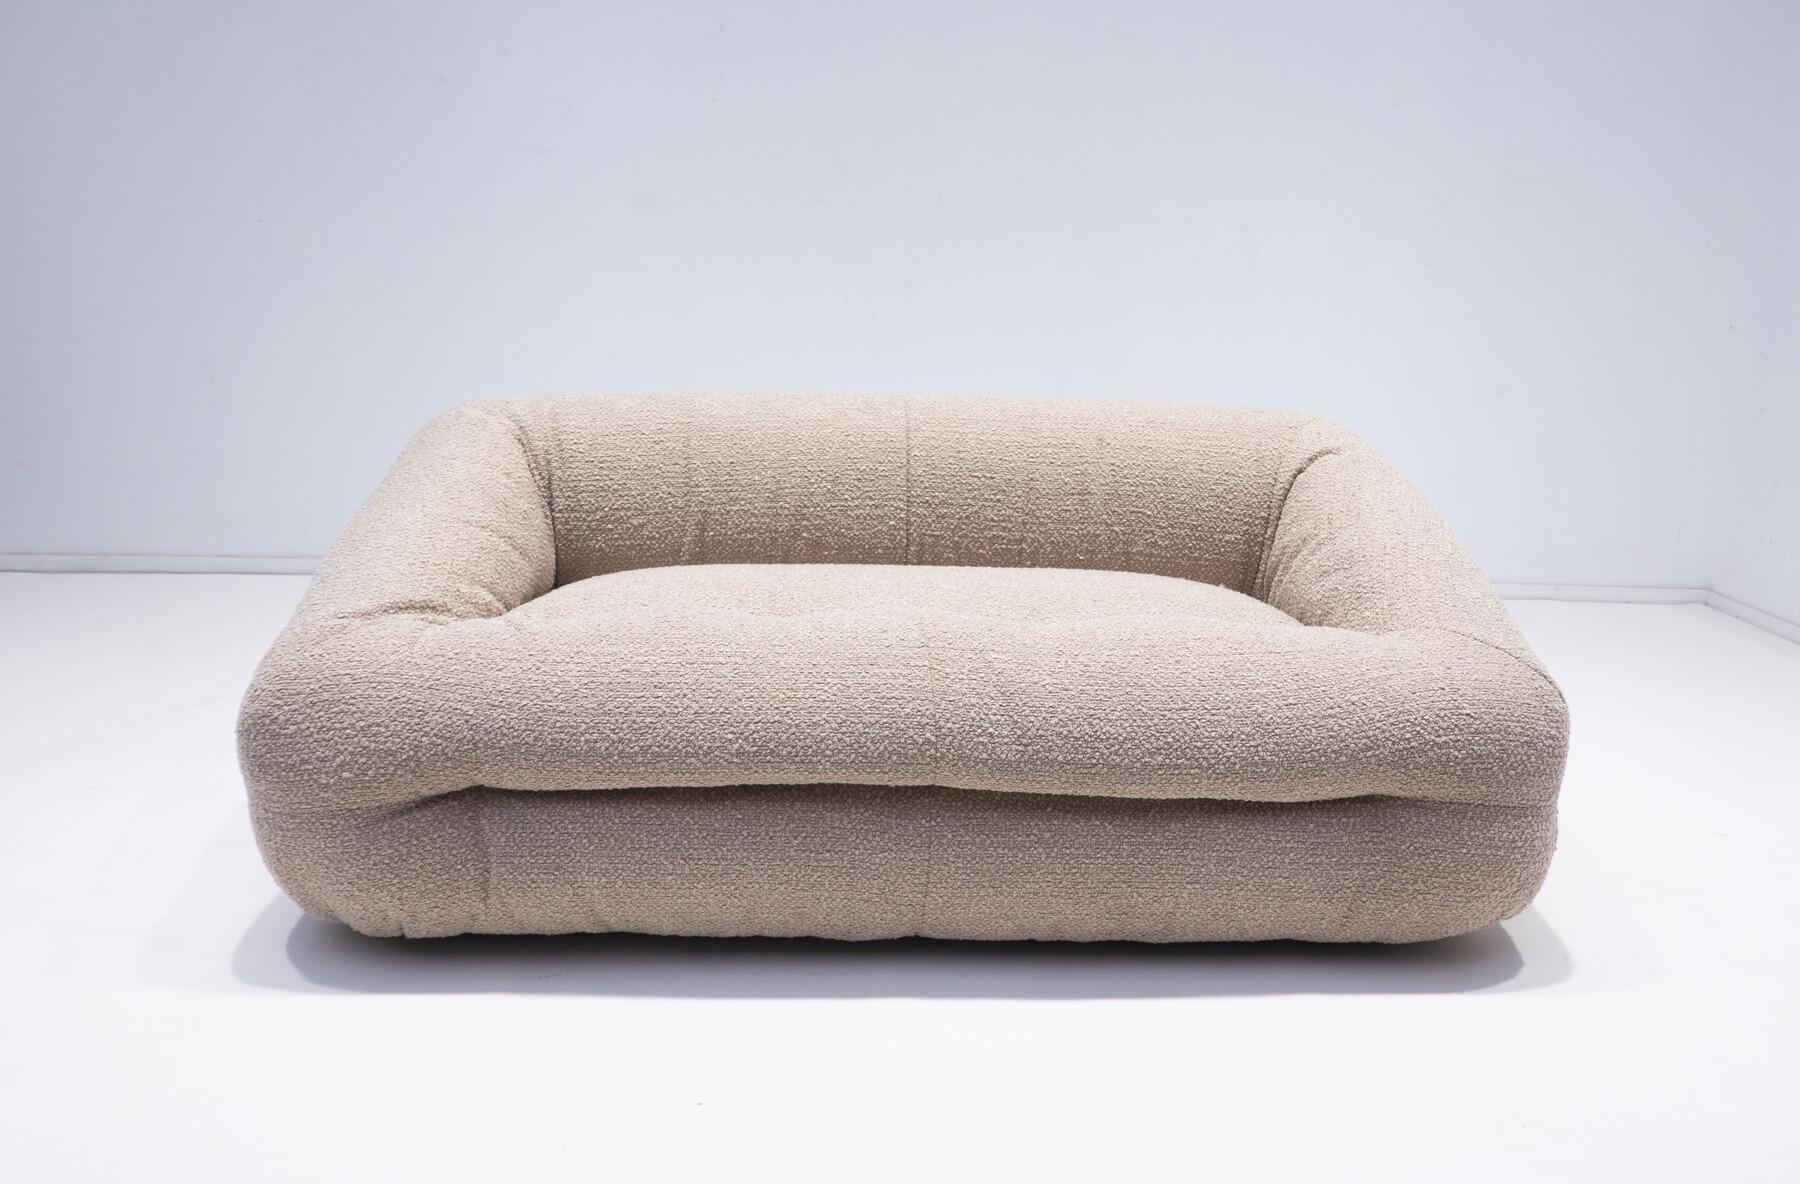 Mid-Century Modern Italian Sofa, Beige Boucle Fabric, Italy, 1960s For Sale 1